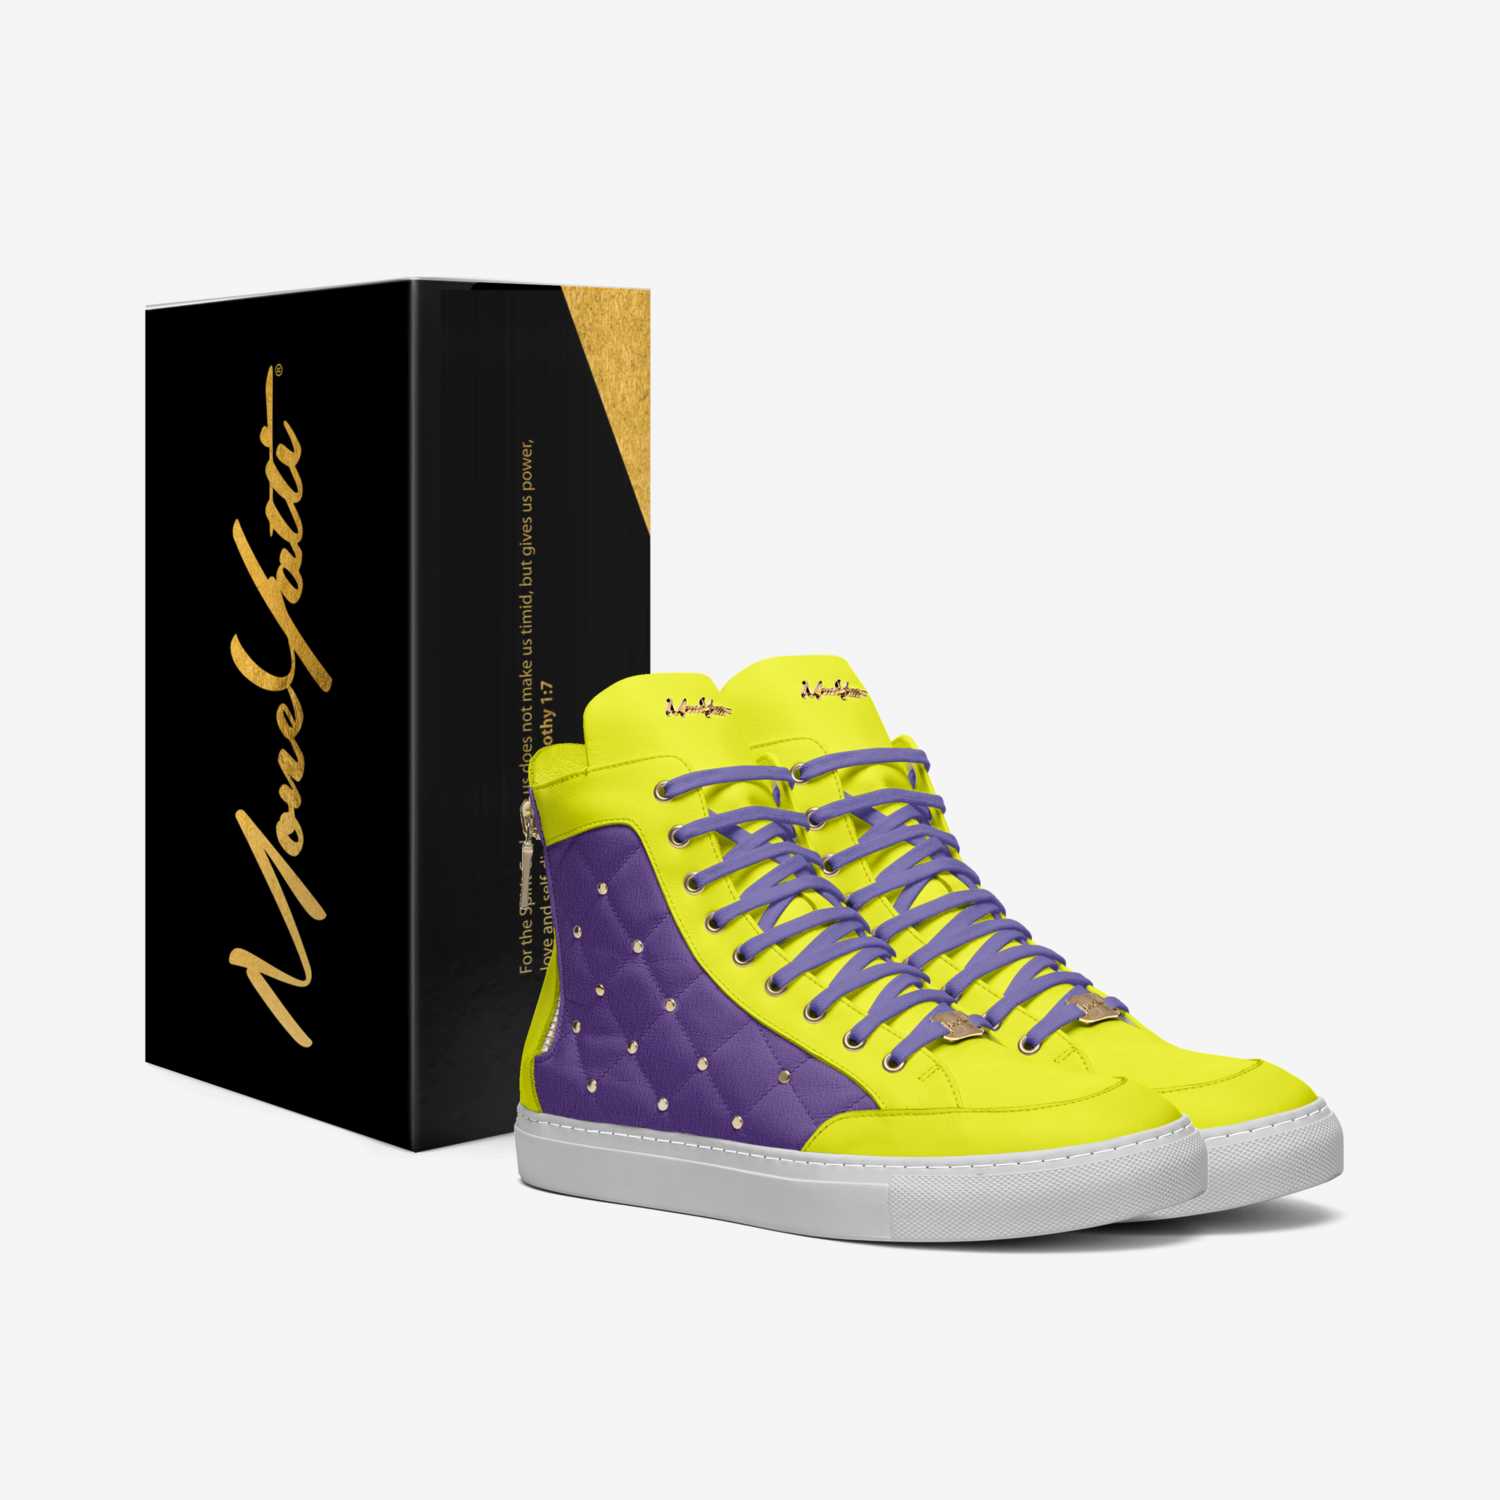 MONEYATTI LTD 210 custom made in Italy shoes by Moneyatti Brand | Box view